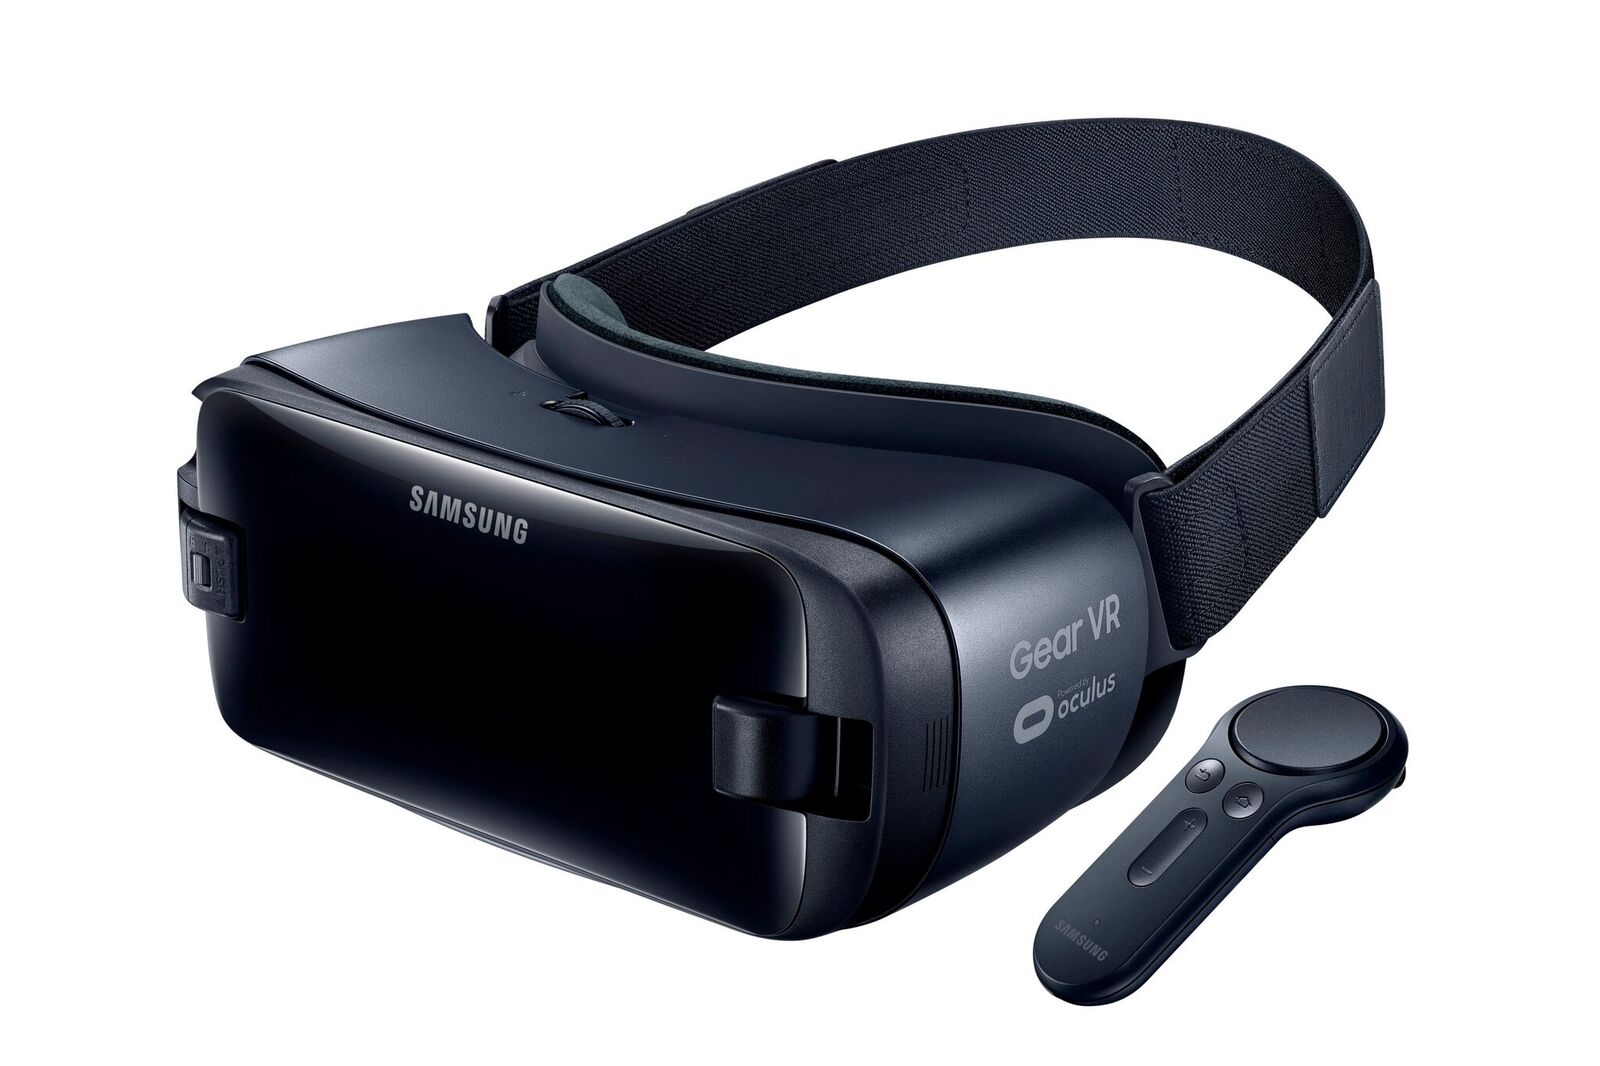 Samsung Gear VR with remote